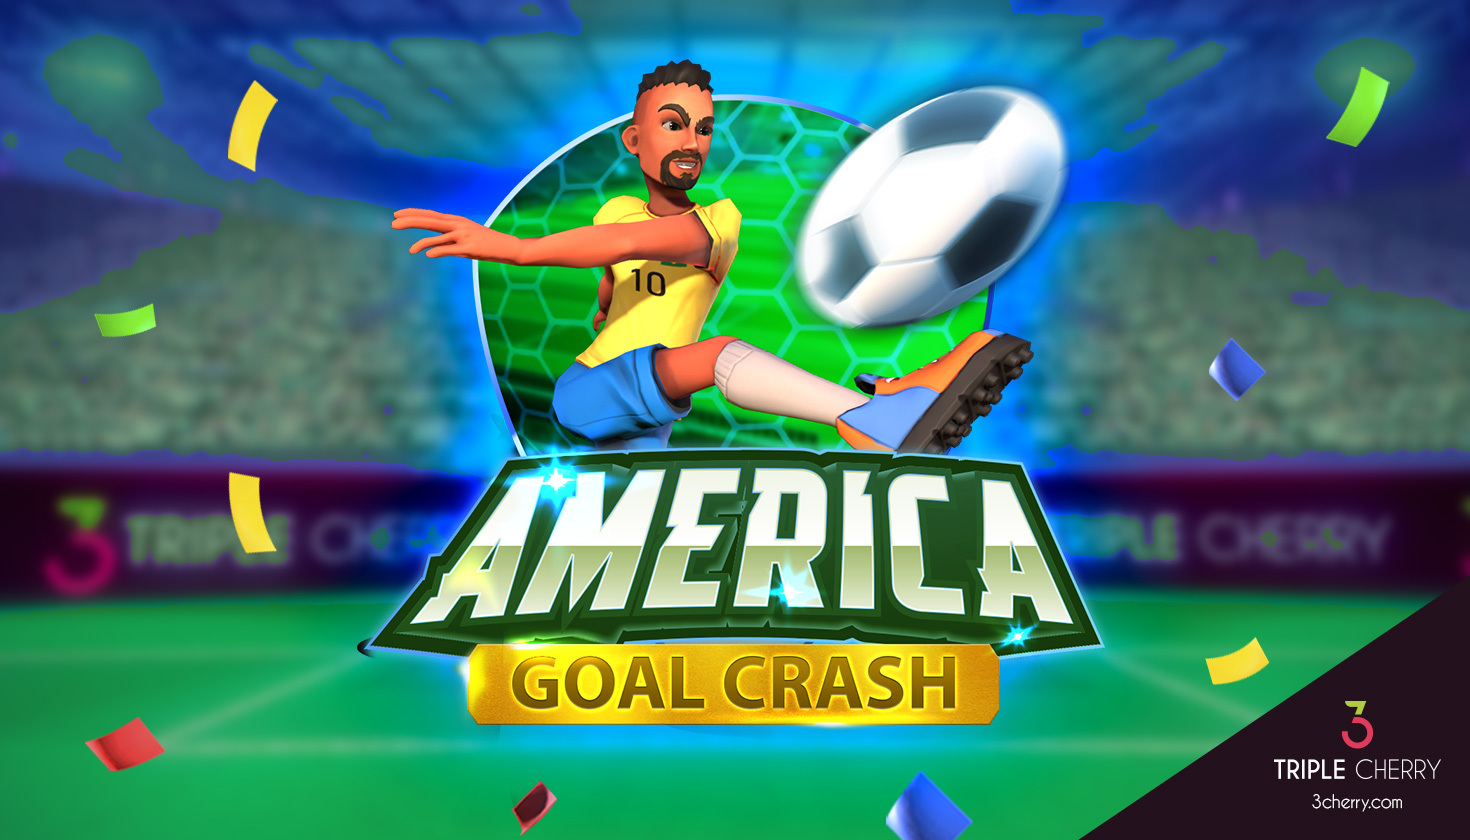 Goal Crash America